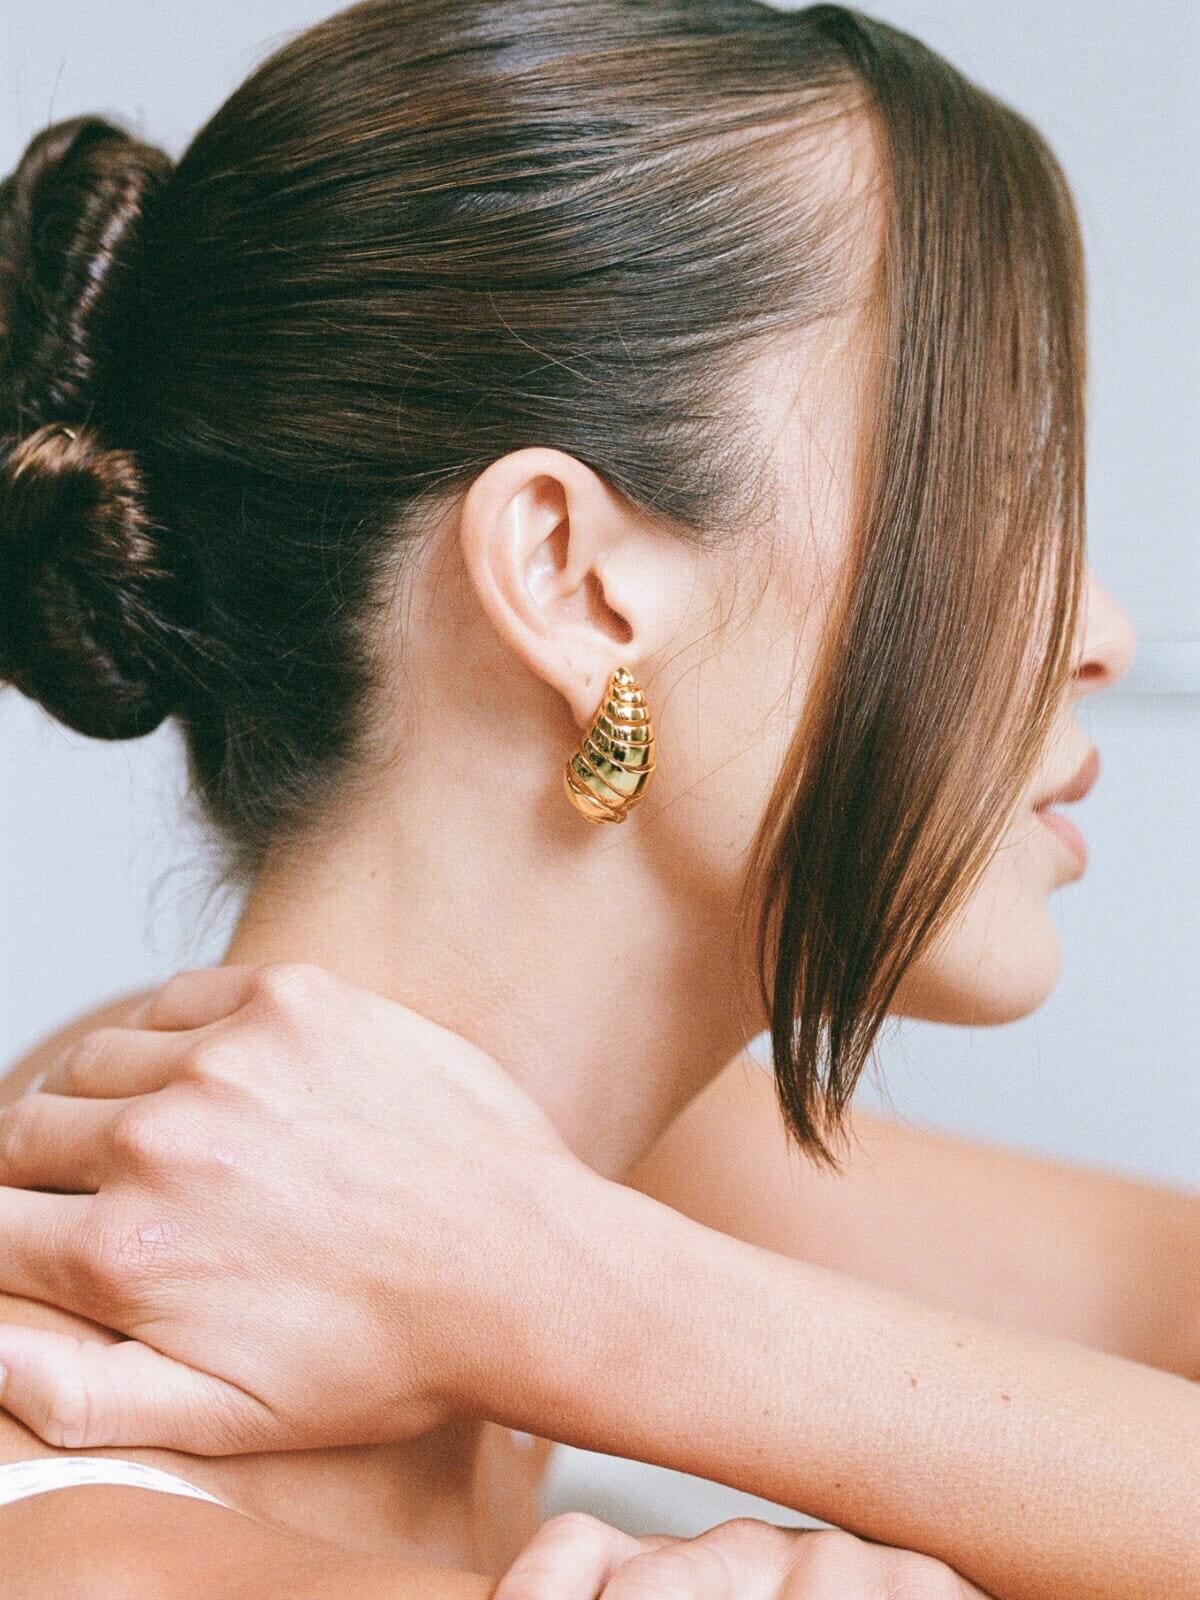 Porter | Blob Earrings - Spiral Gold | Perlu